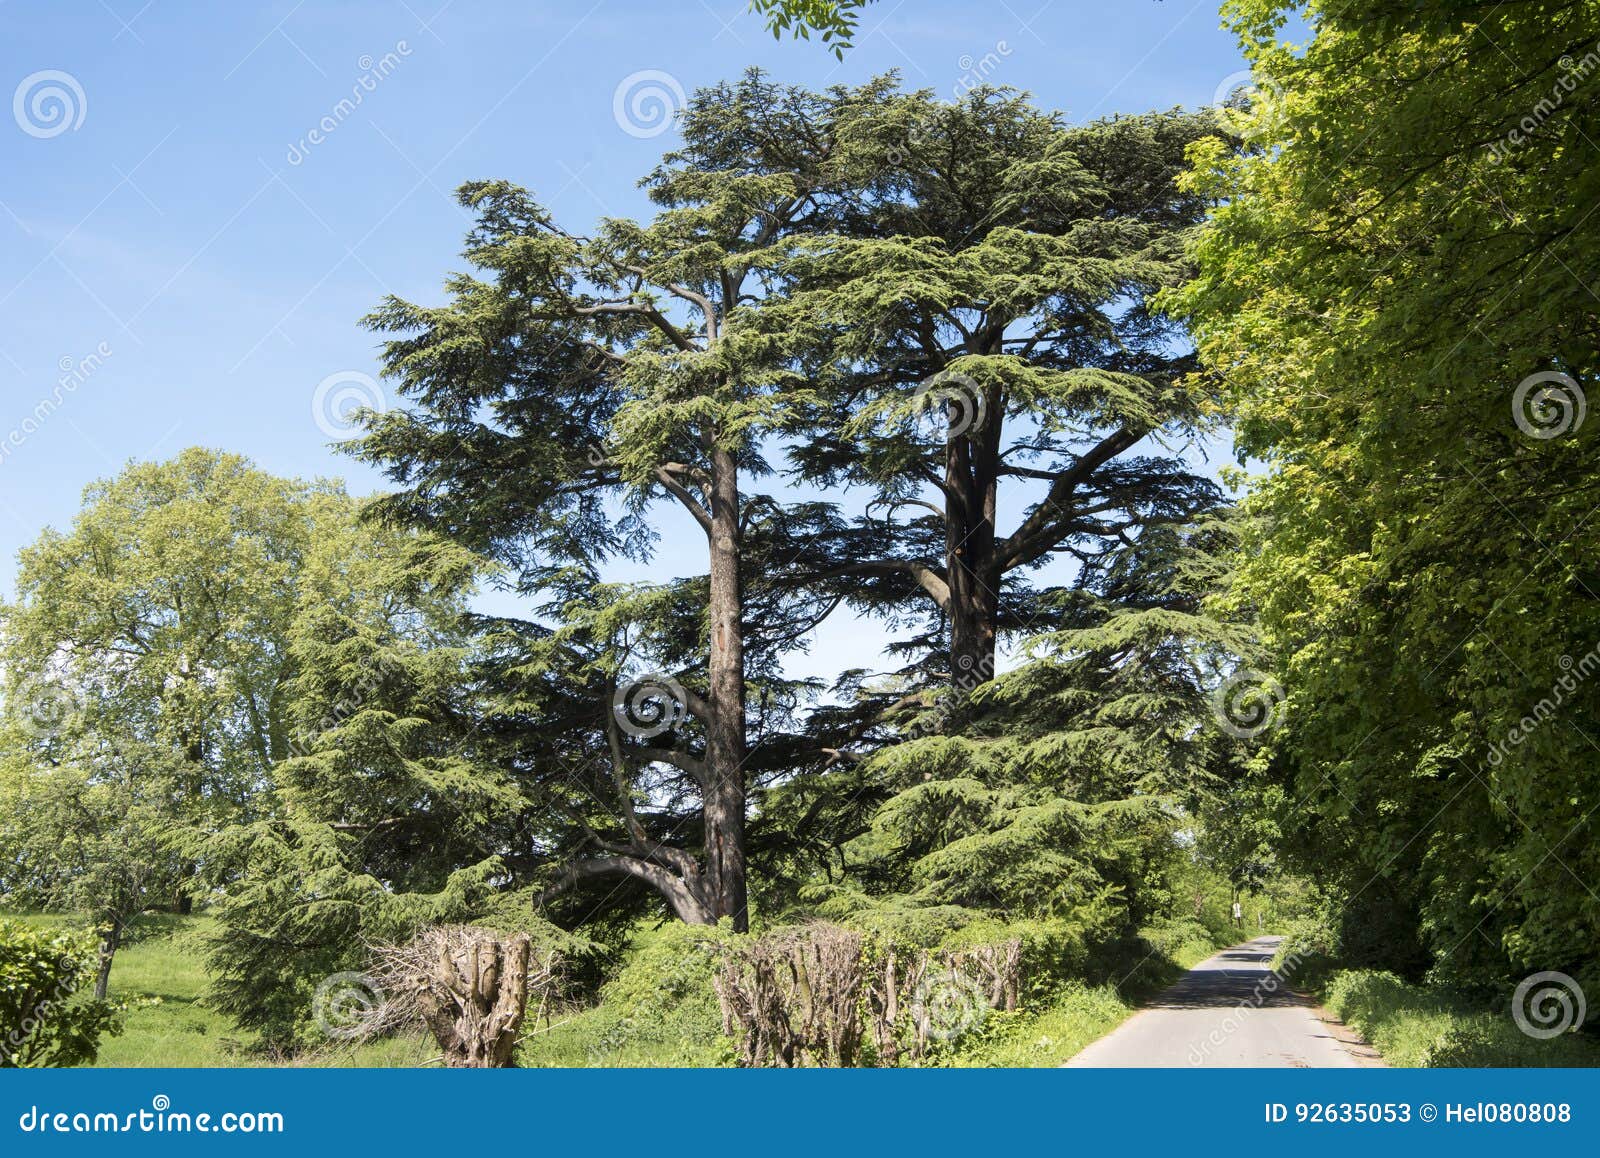 lebanon cedar, old protected tree in park